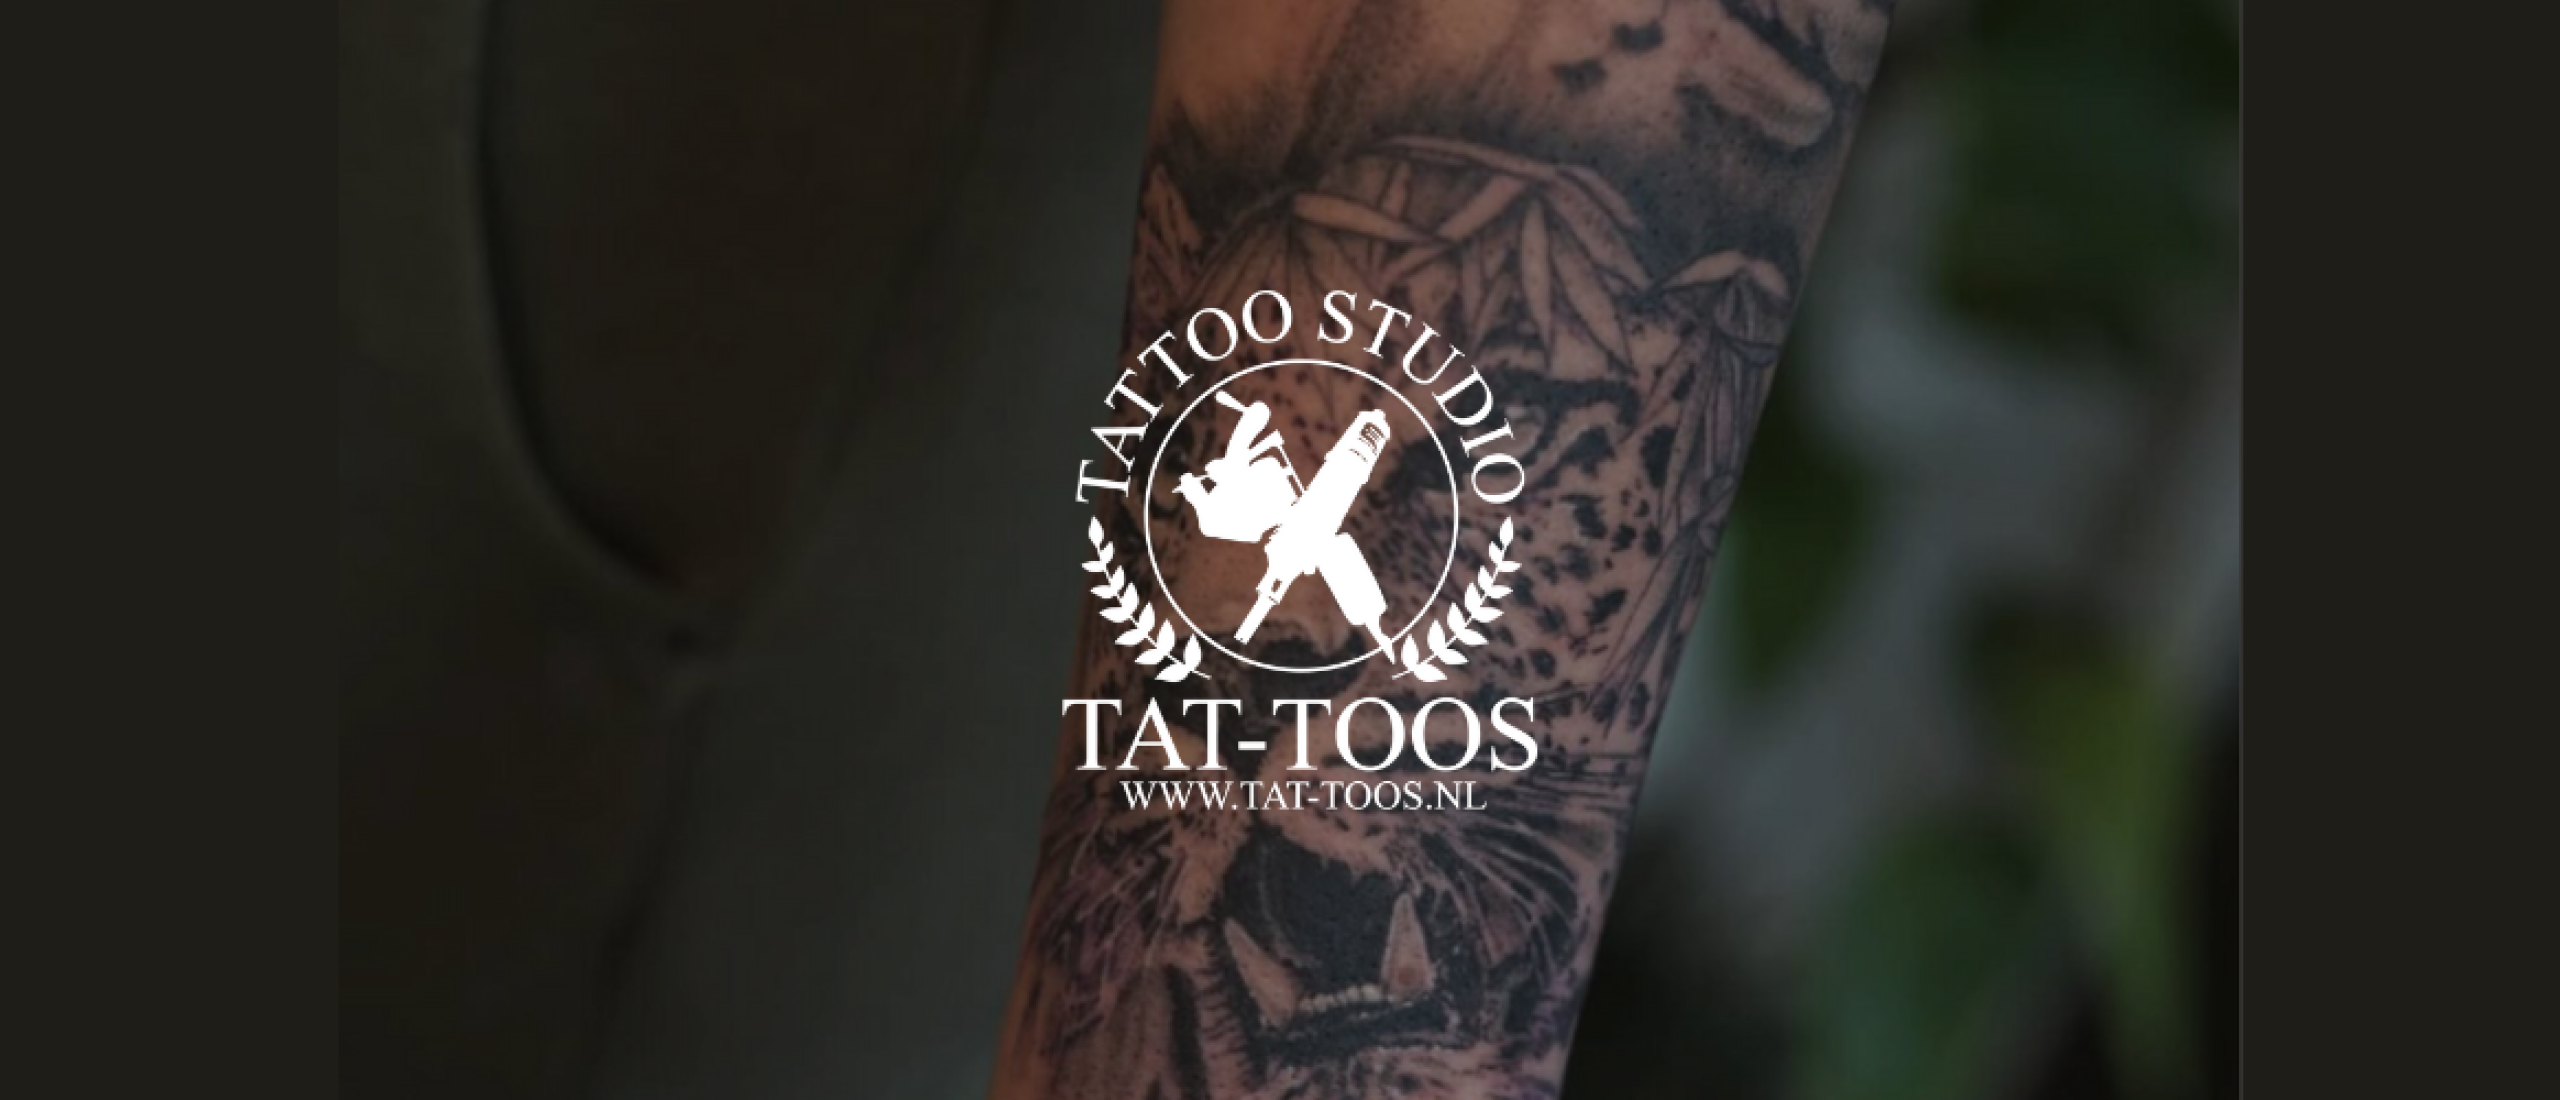 tattoo studio valkenswaard tat-toos